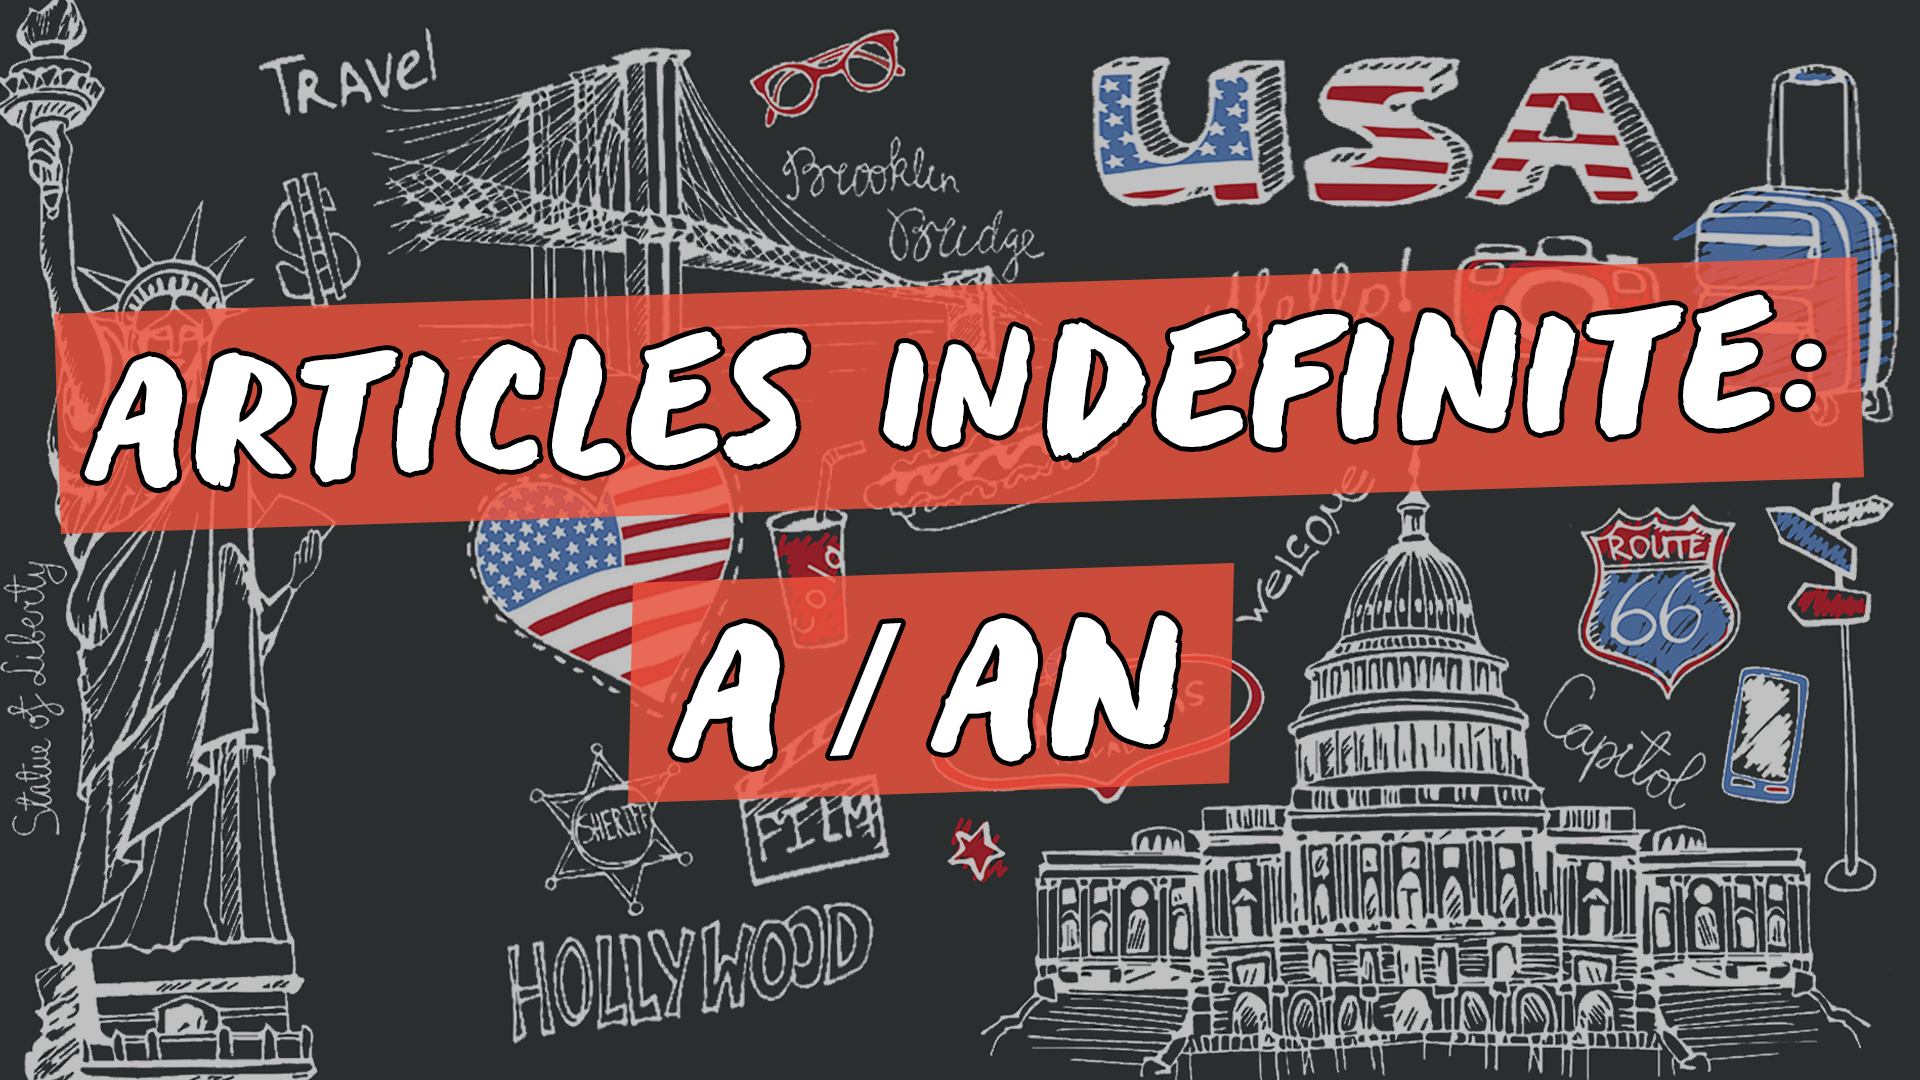 "Articles Indefinite: A / AN" escrito sobre ilustração de símbolos estadunidenses